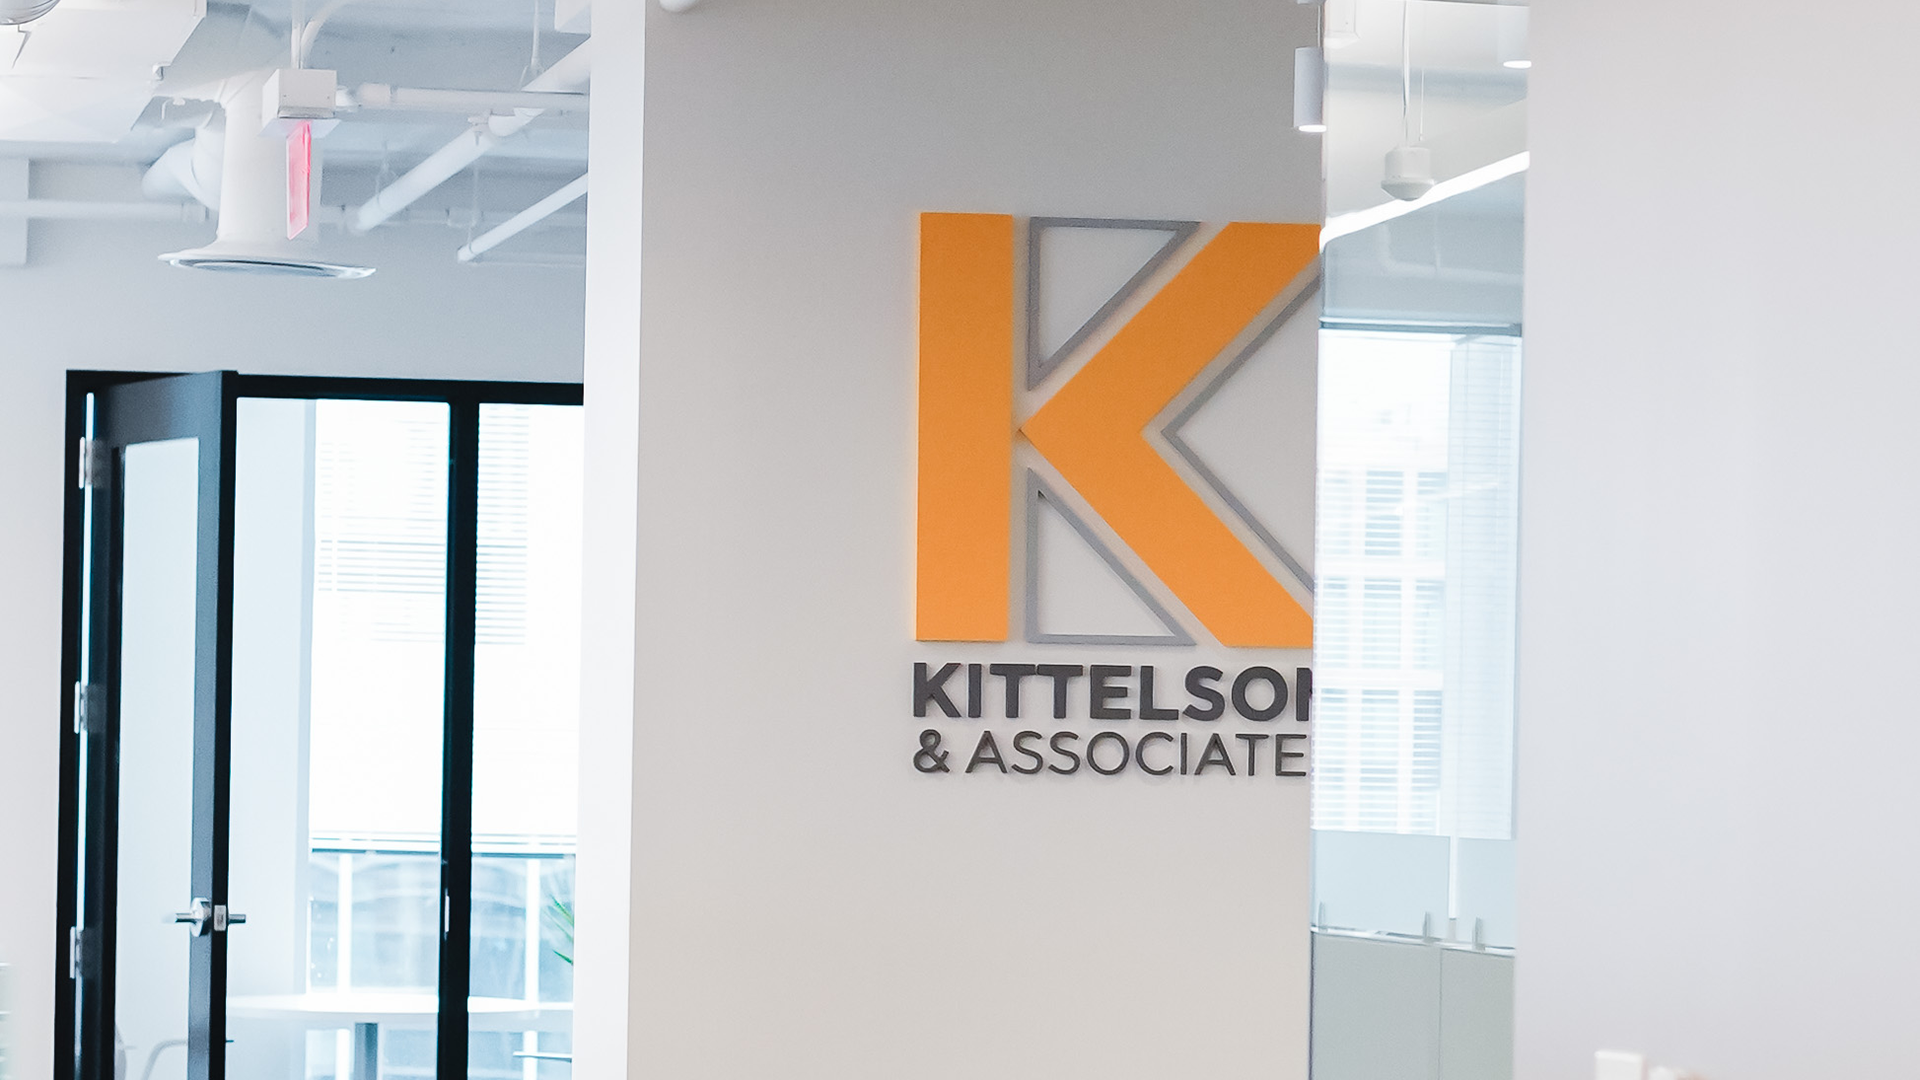 Kittelson & Associates Office Sign